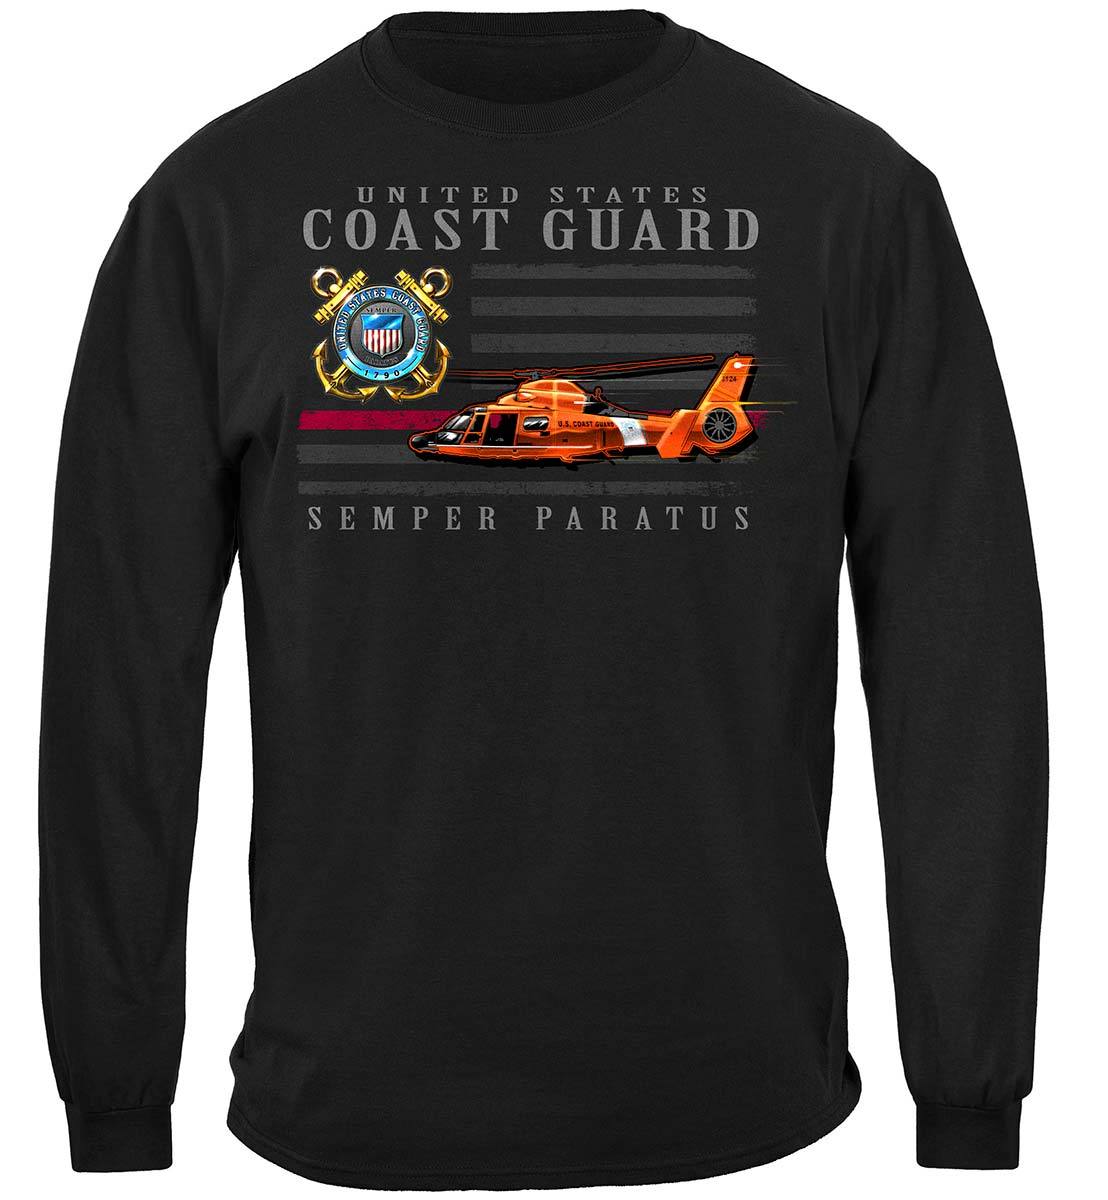 Coast Guard patriotic Flag Premium Hooded Sweat Shirt